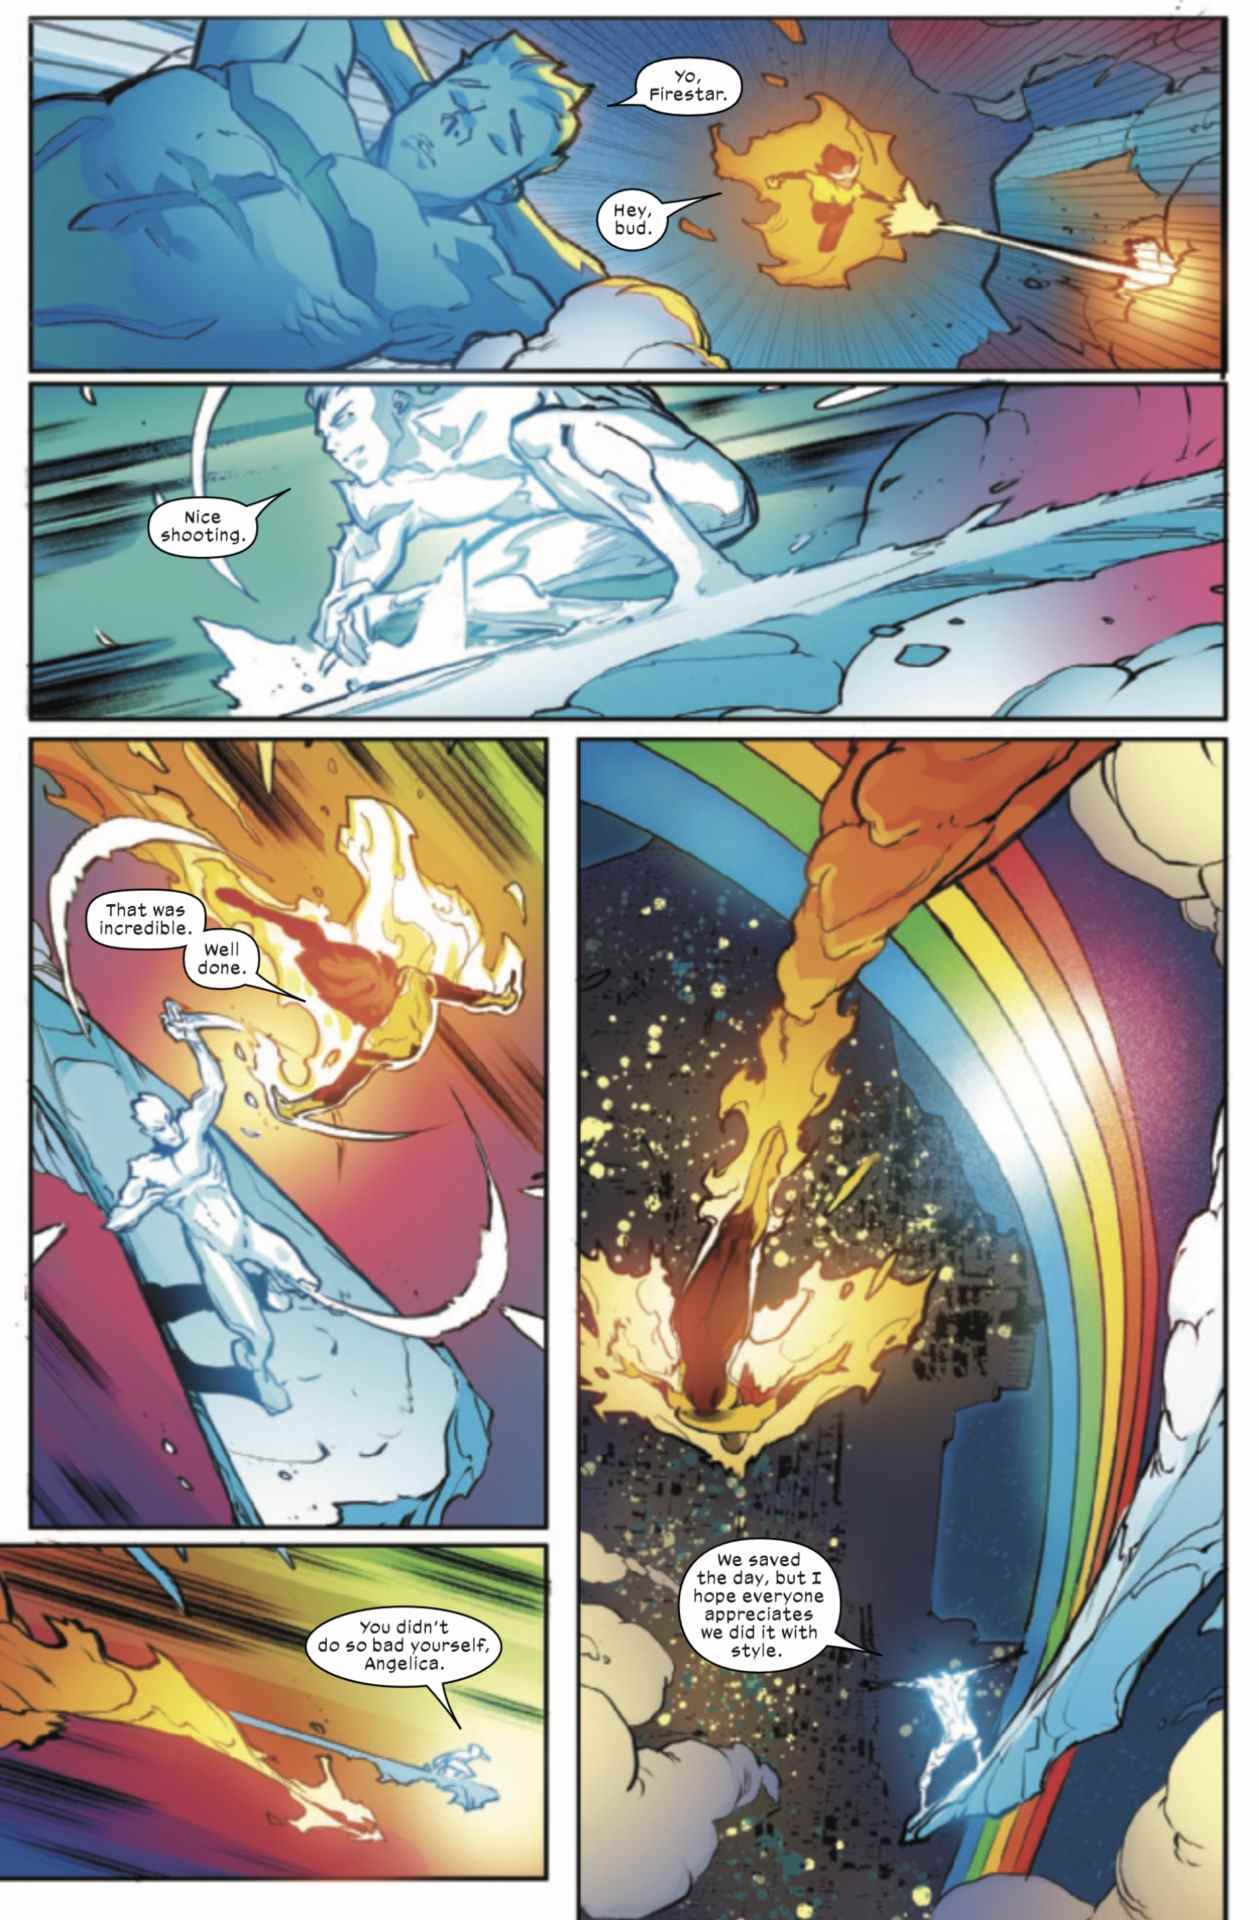 Page X-Men #14